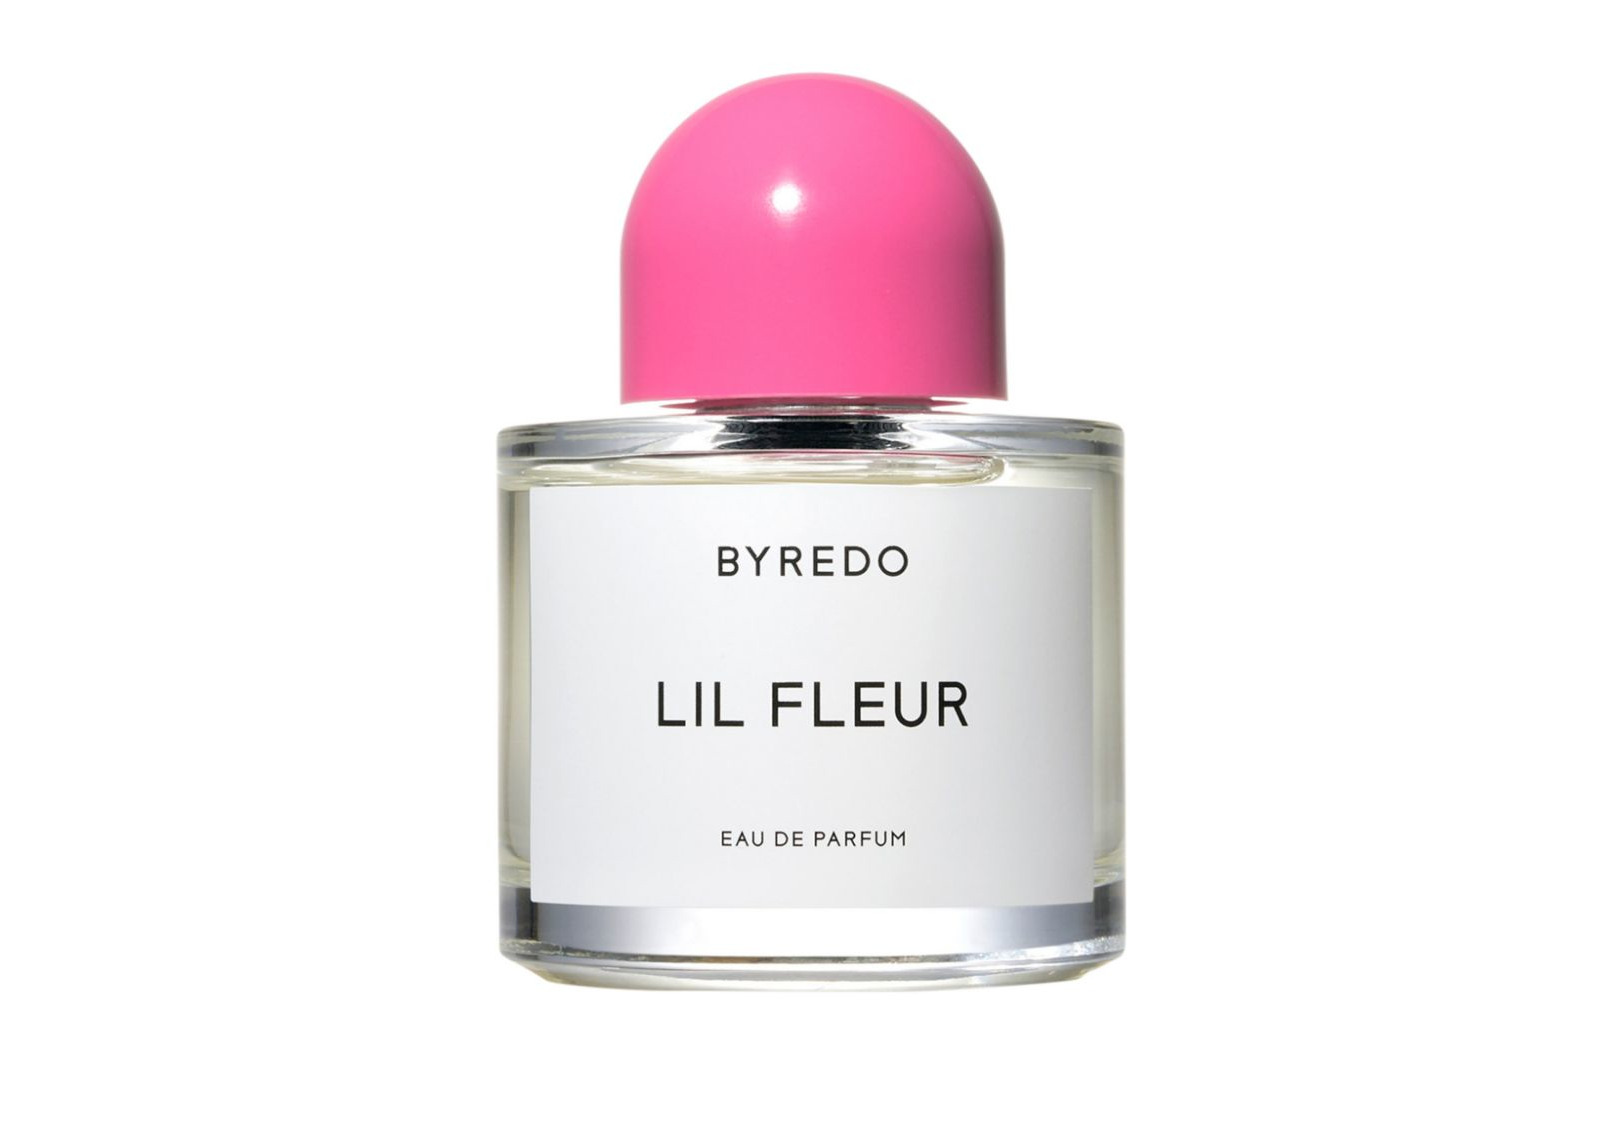 Байредо флер. Byredo Lil fleur Limited. Byredo Lil fleur Limited Edition. Байредо лил Флер. Byredo Lilly fleur.